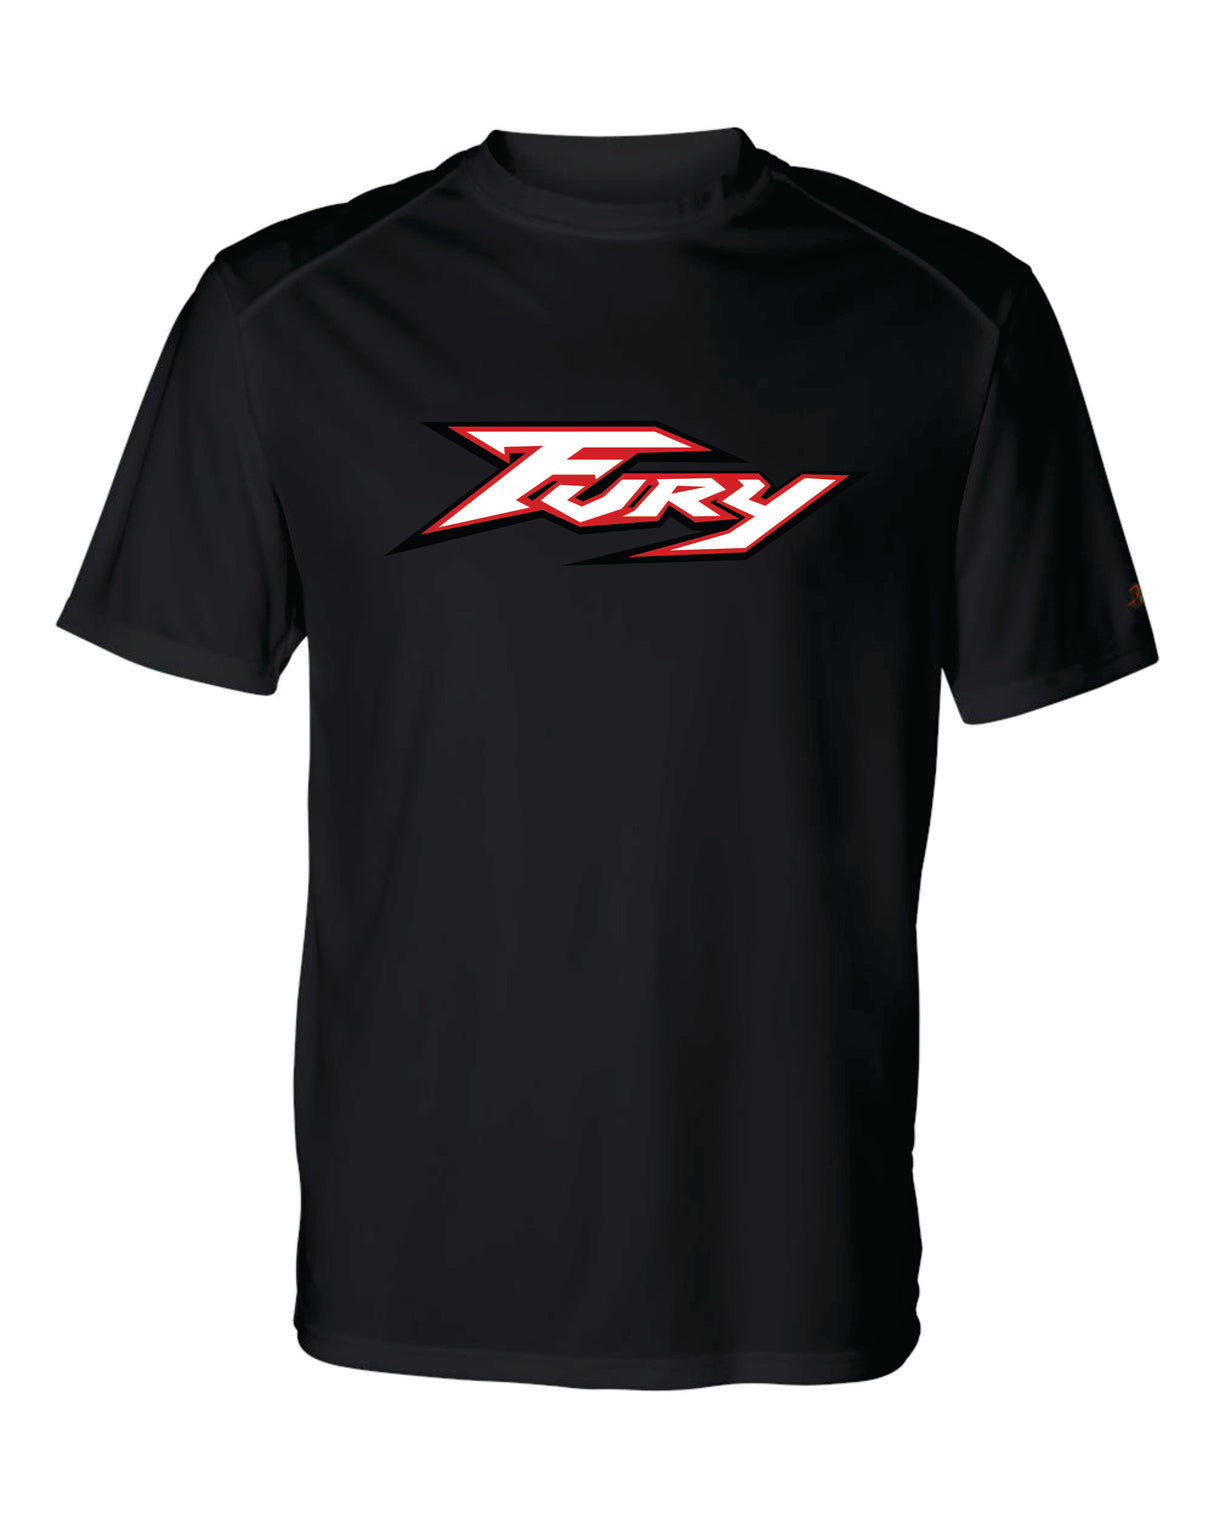 Fury Short Sleeve Badger Dri Fit T shirt